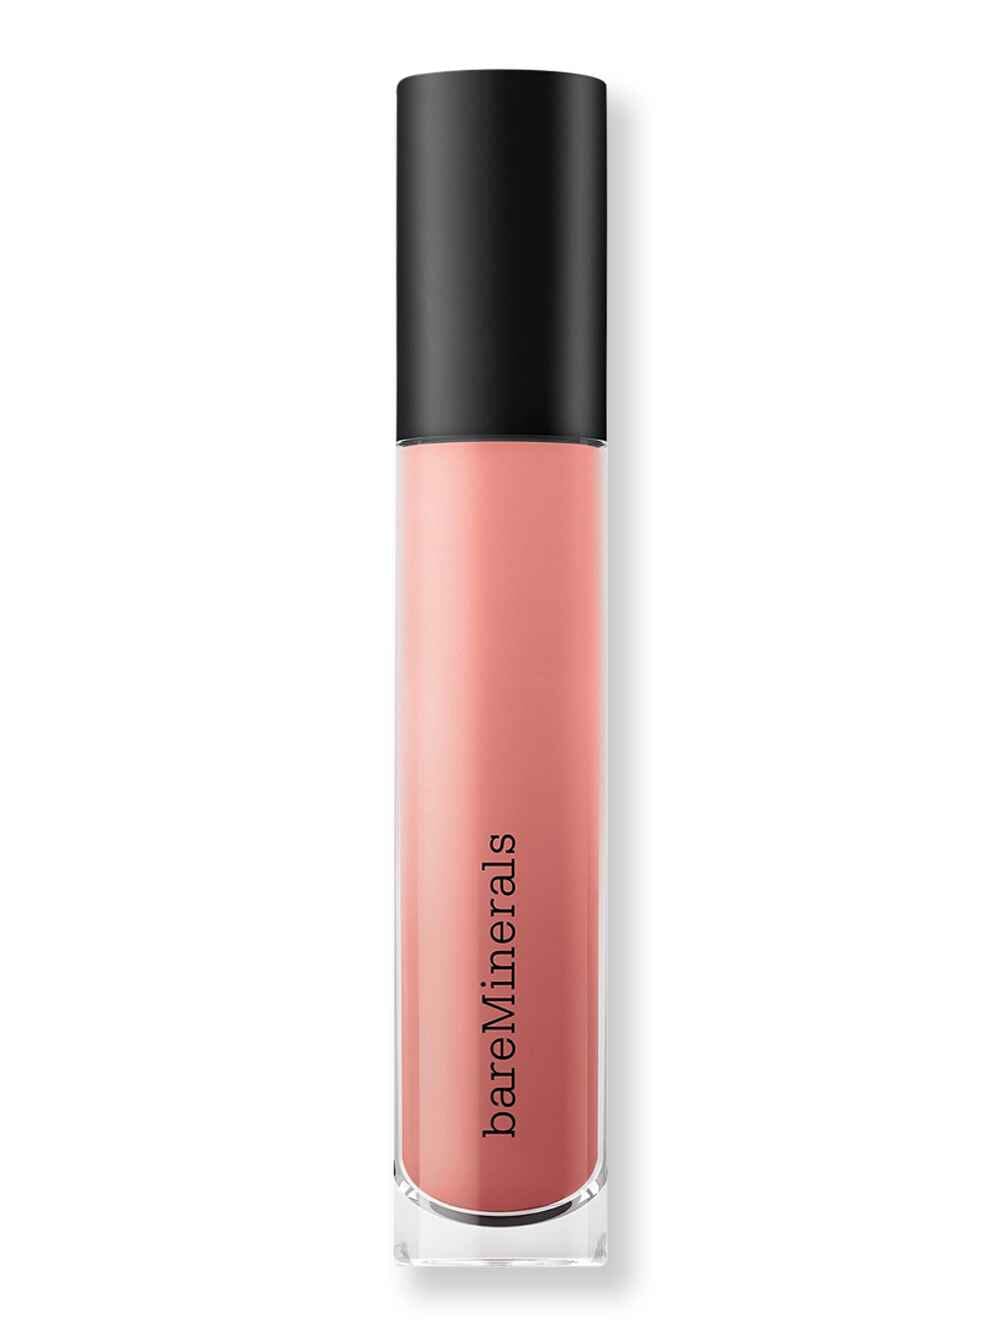 Bareminerals Bareminerals Gen Nude Matte Liquid Lipcolor Infamous 0.13 fl oz4 ml Lipstick, Lip Gloss, & Lip Liners 